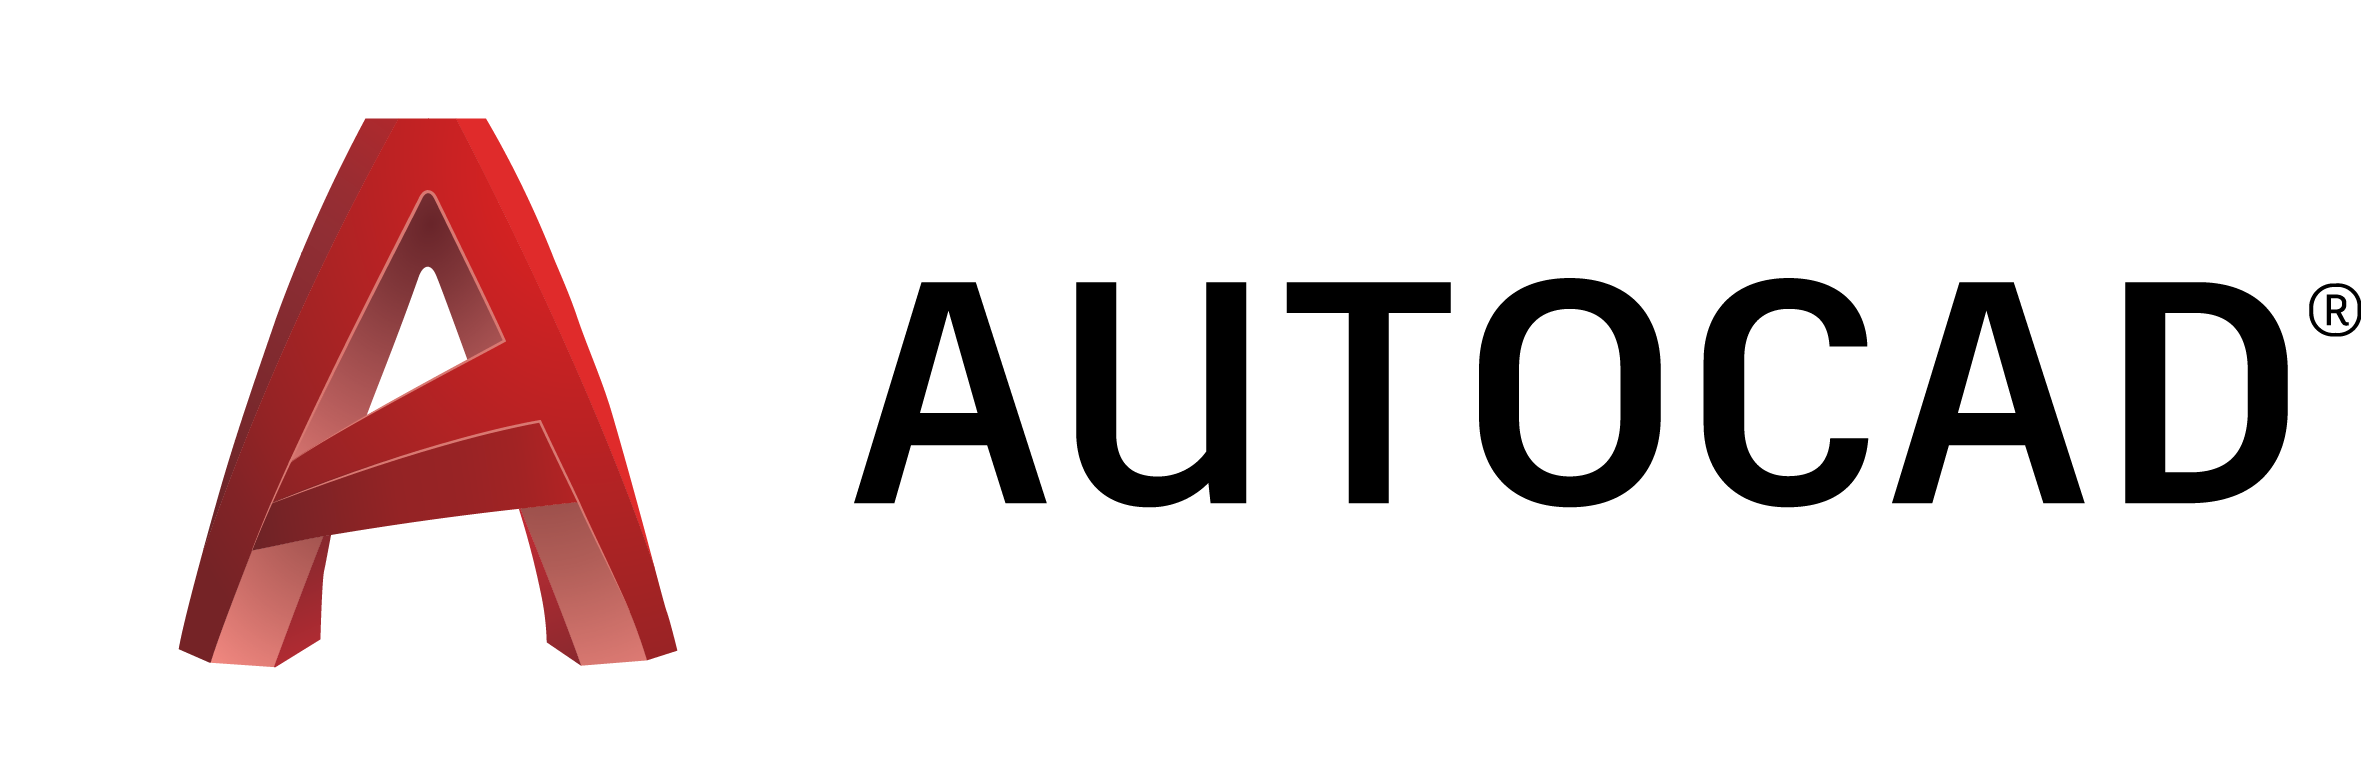 Autocad logo autodesk.